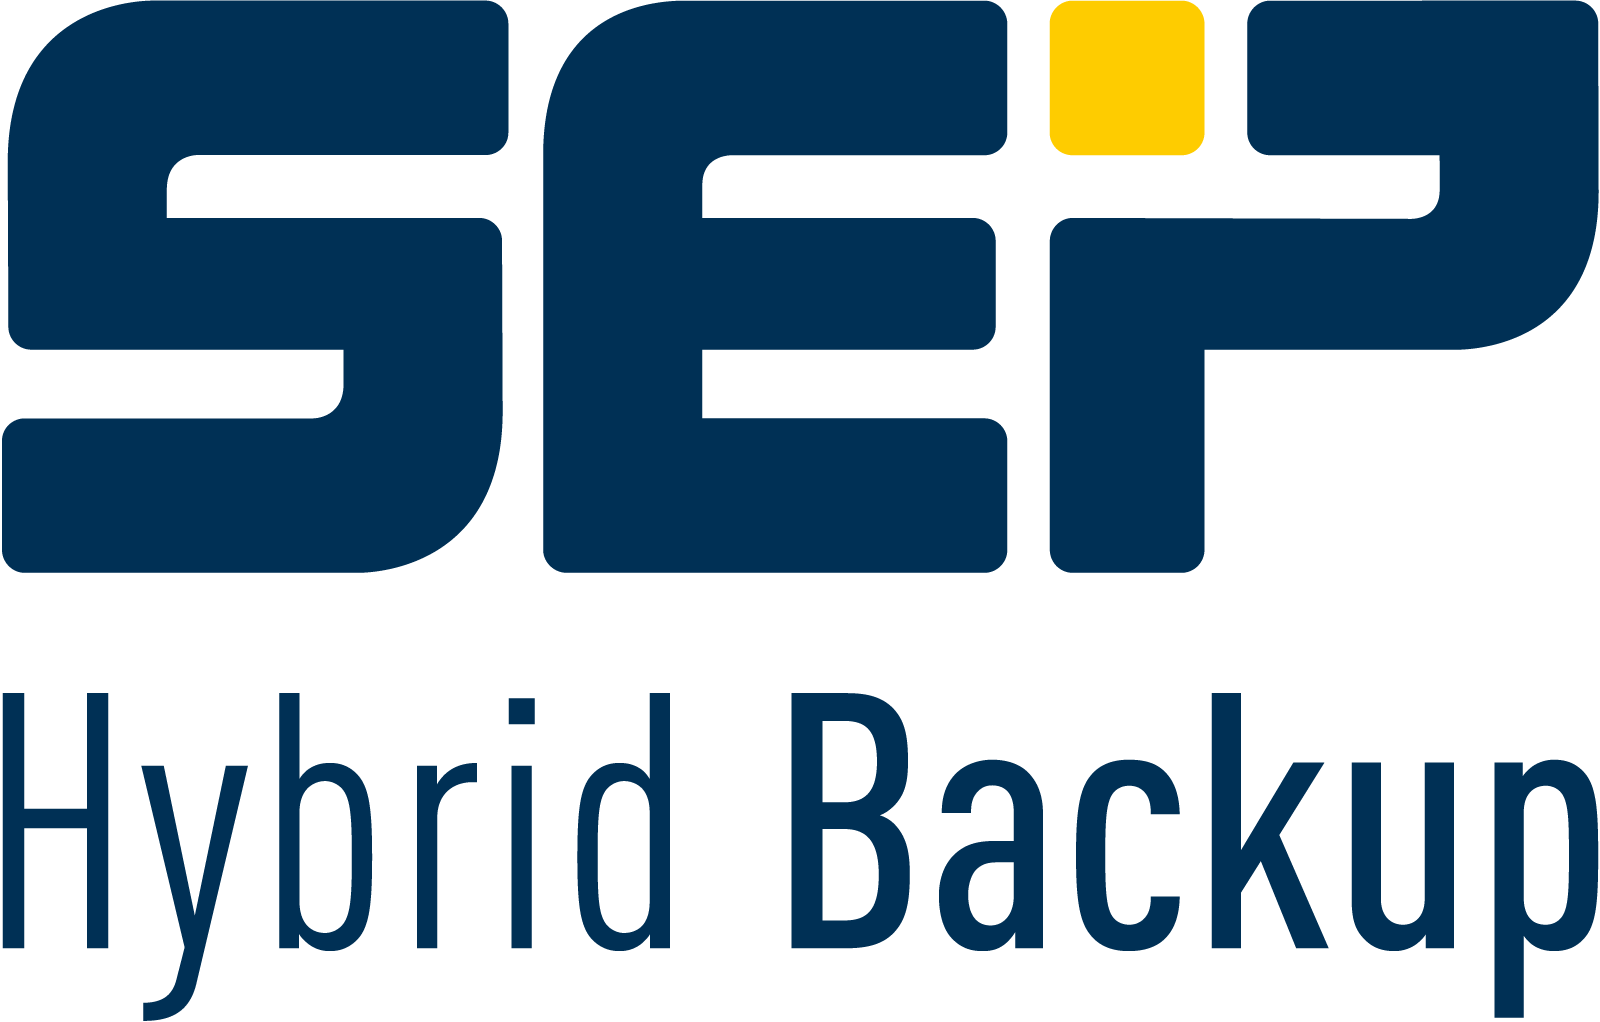 SEP Hybrid Backup